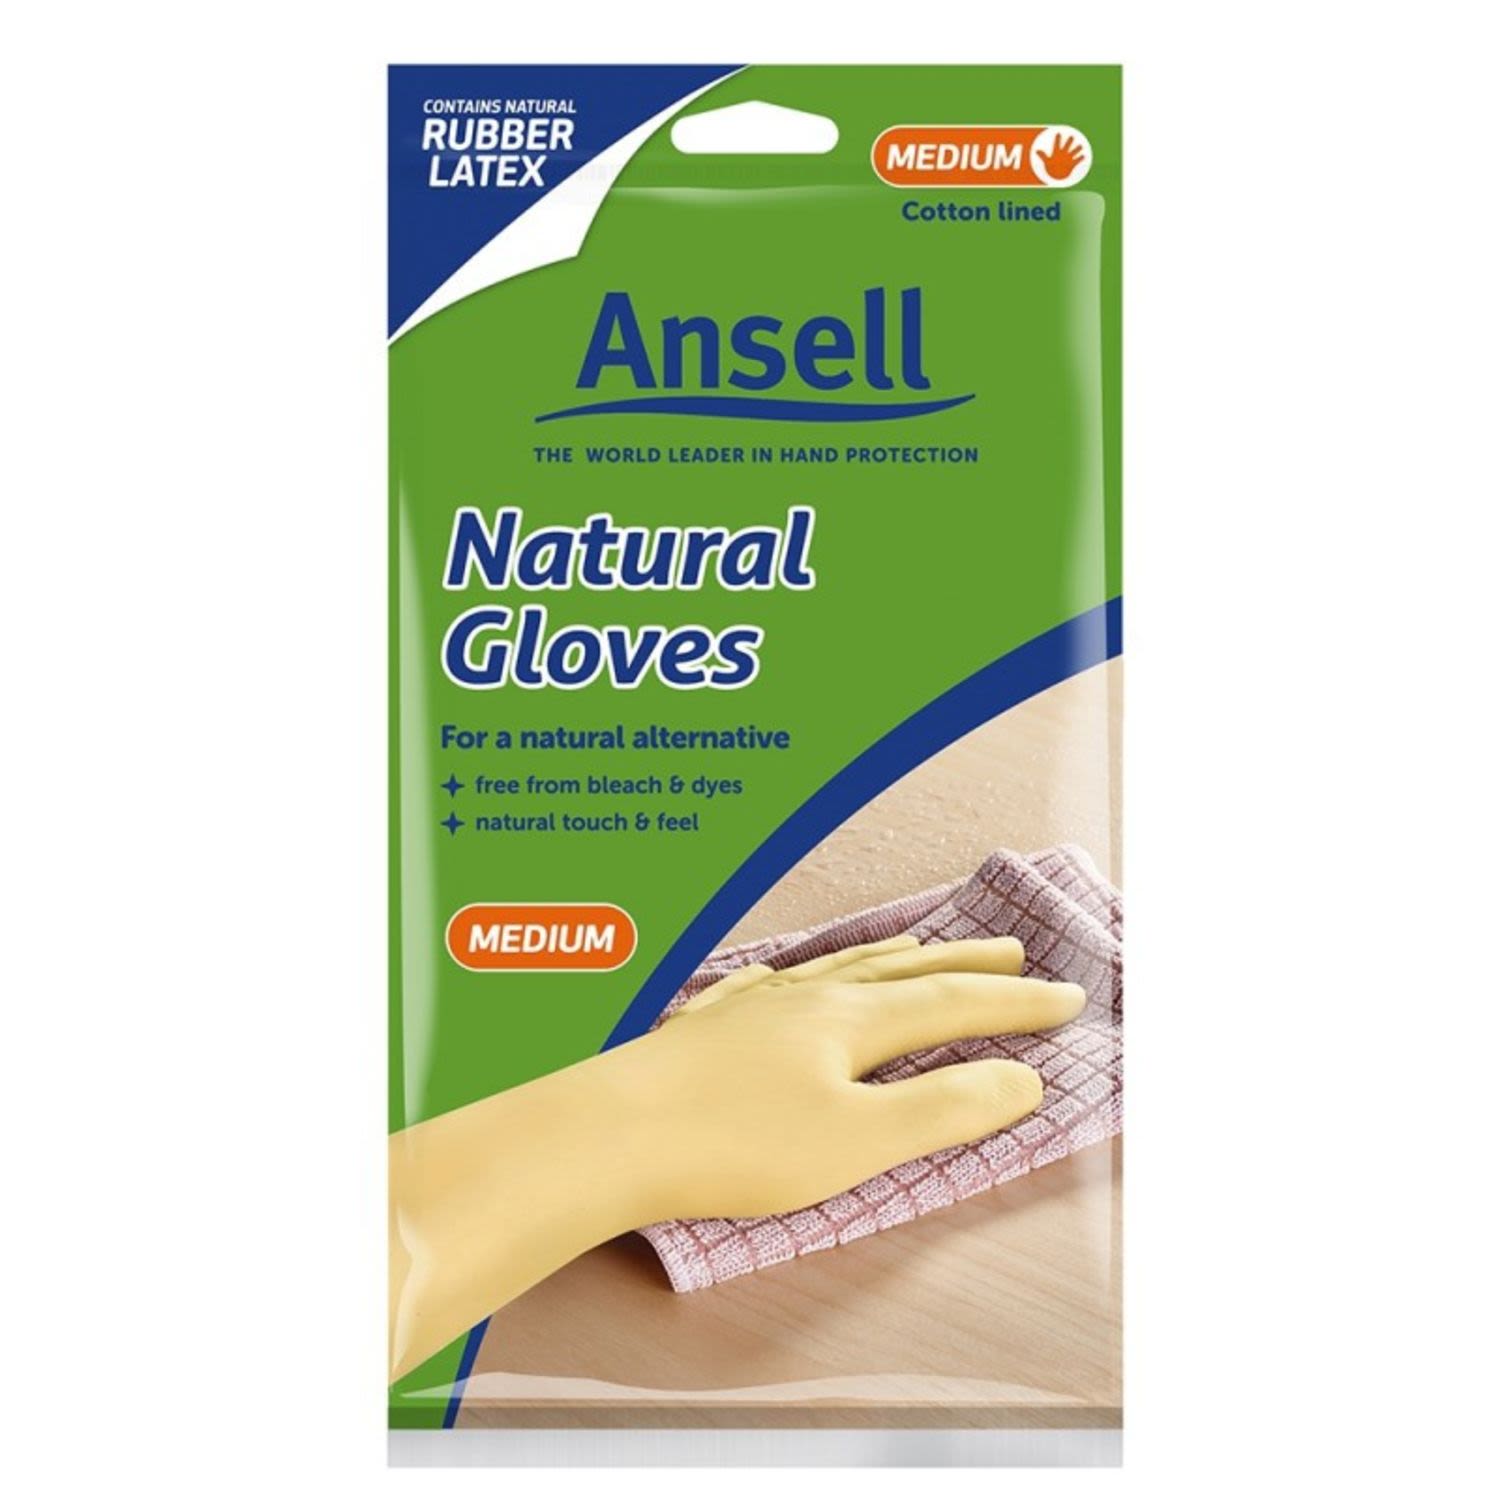 Ansell Gloves Natural Medium, 1 Each